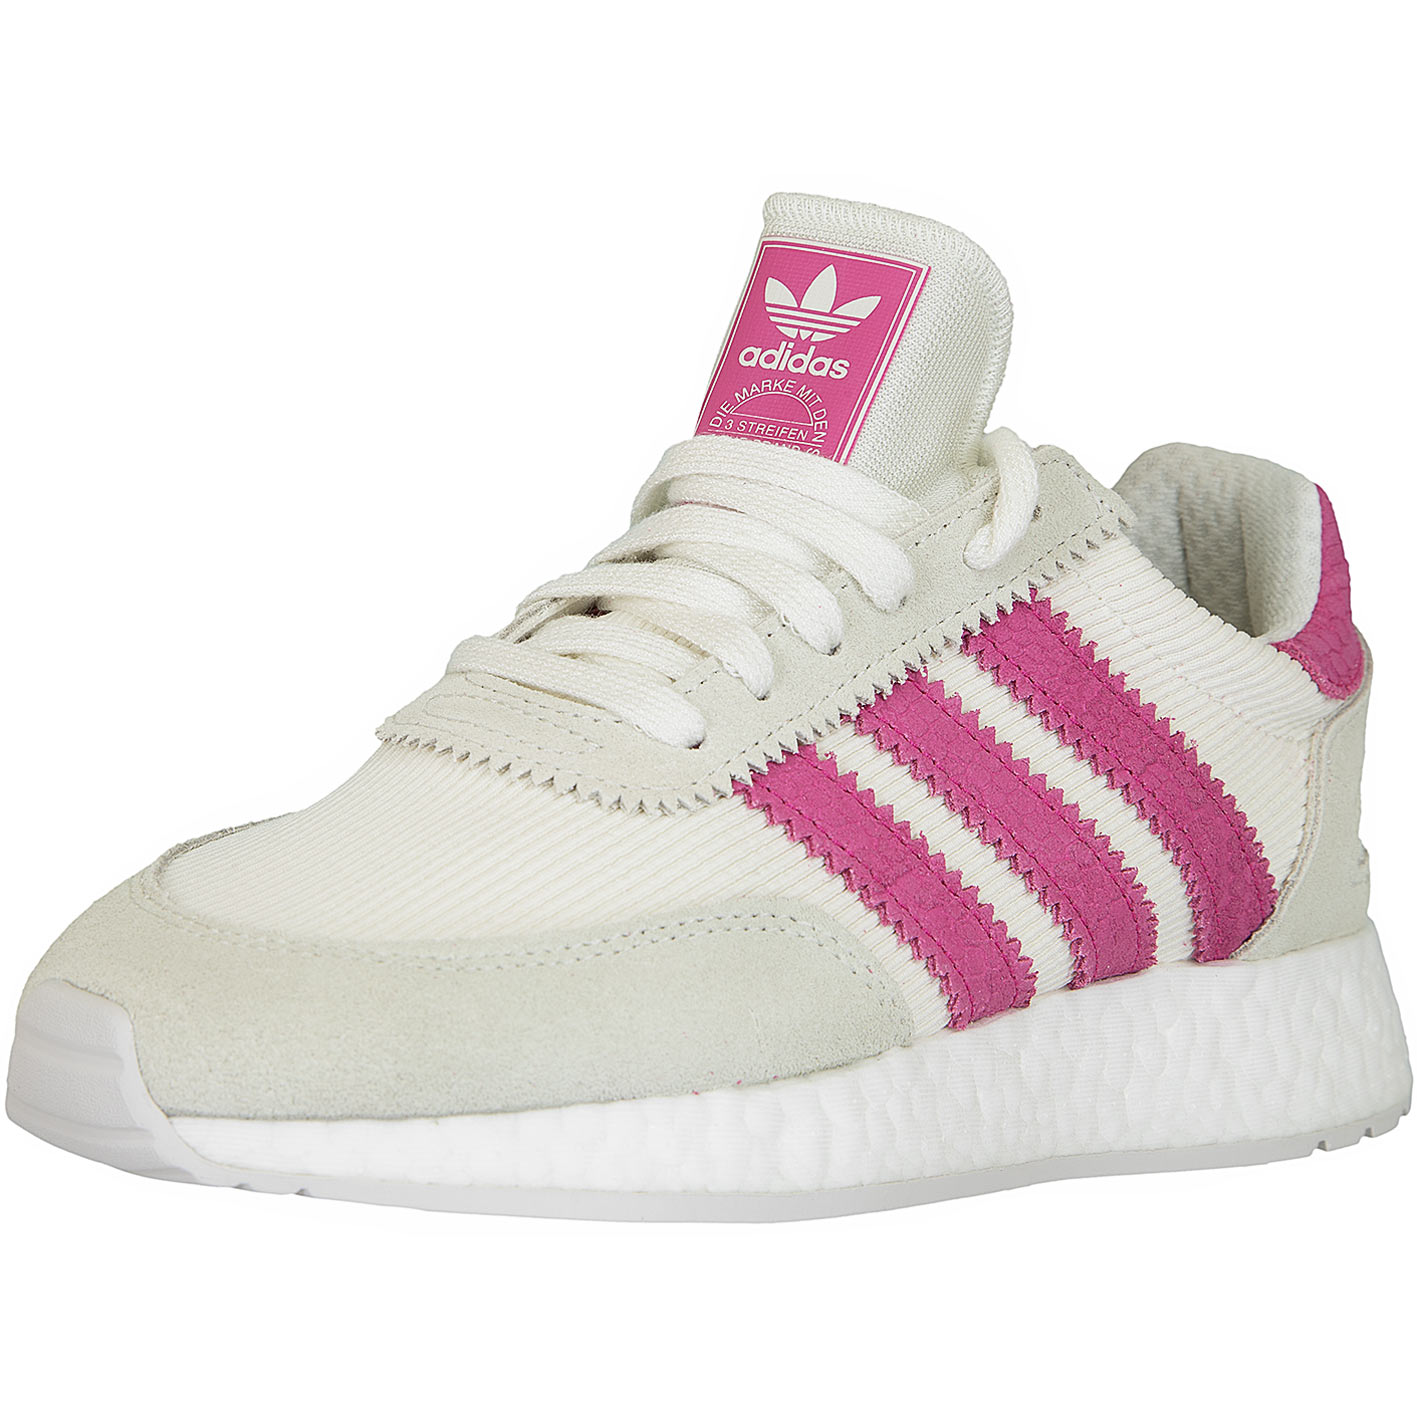 ☆ Adidas Originals Damen Sneaker I-5923 weiß/pink - hier bestellen!